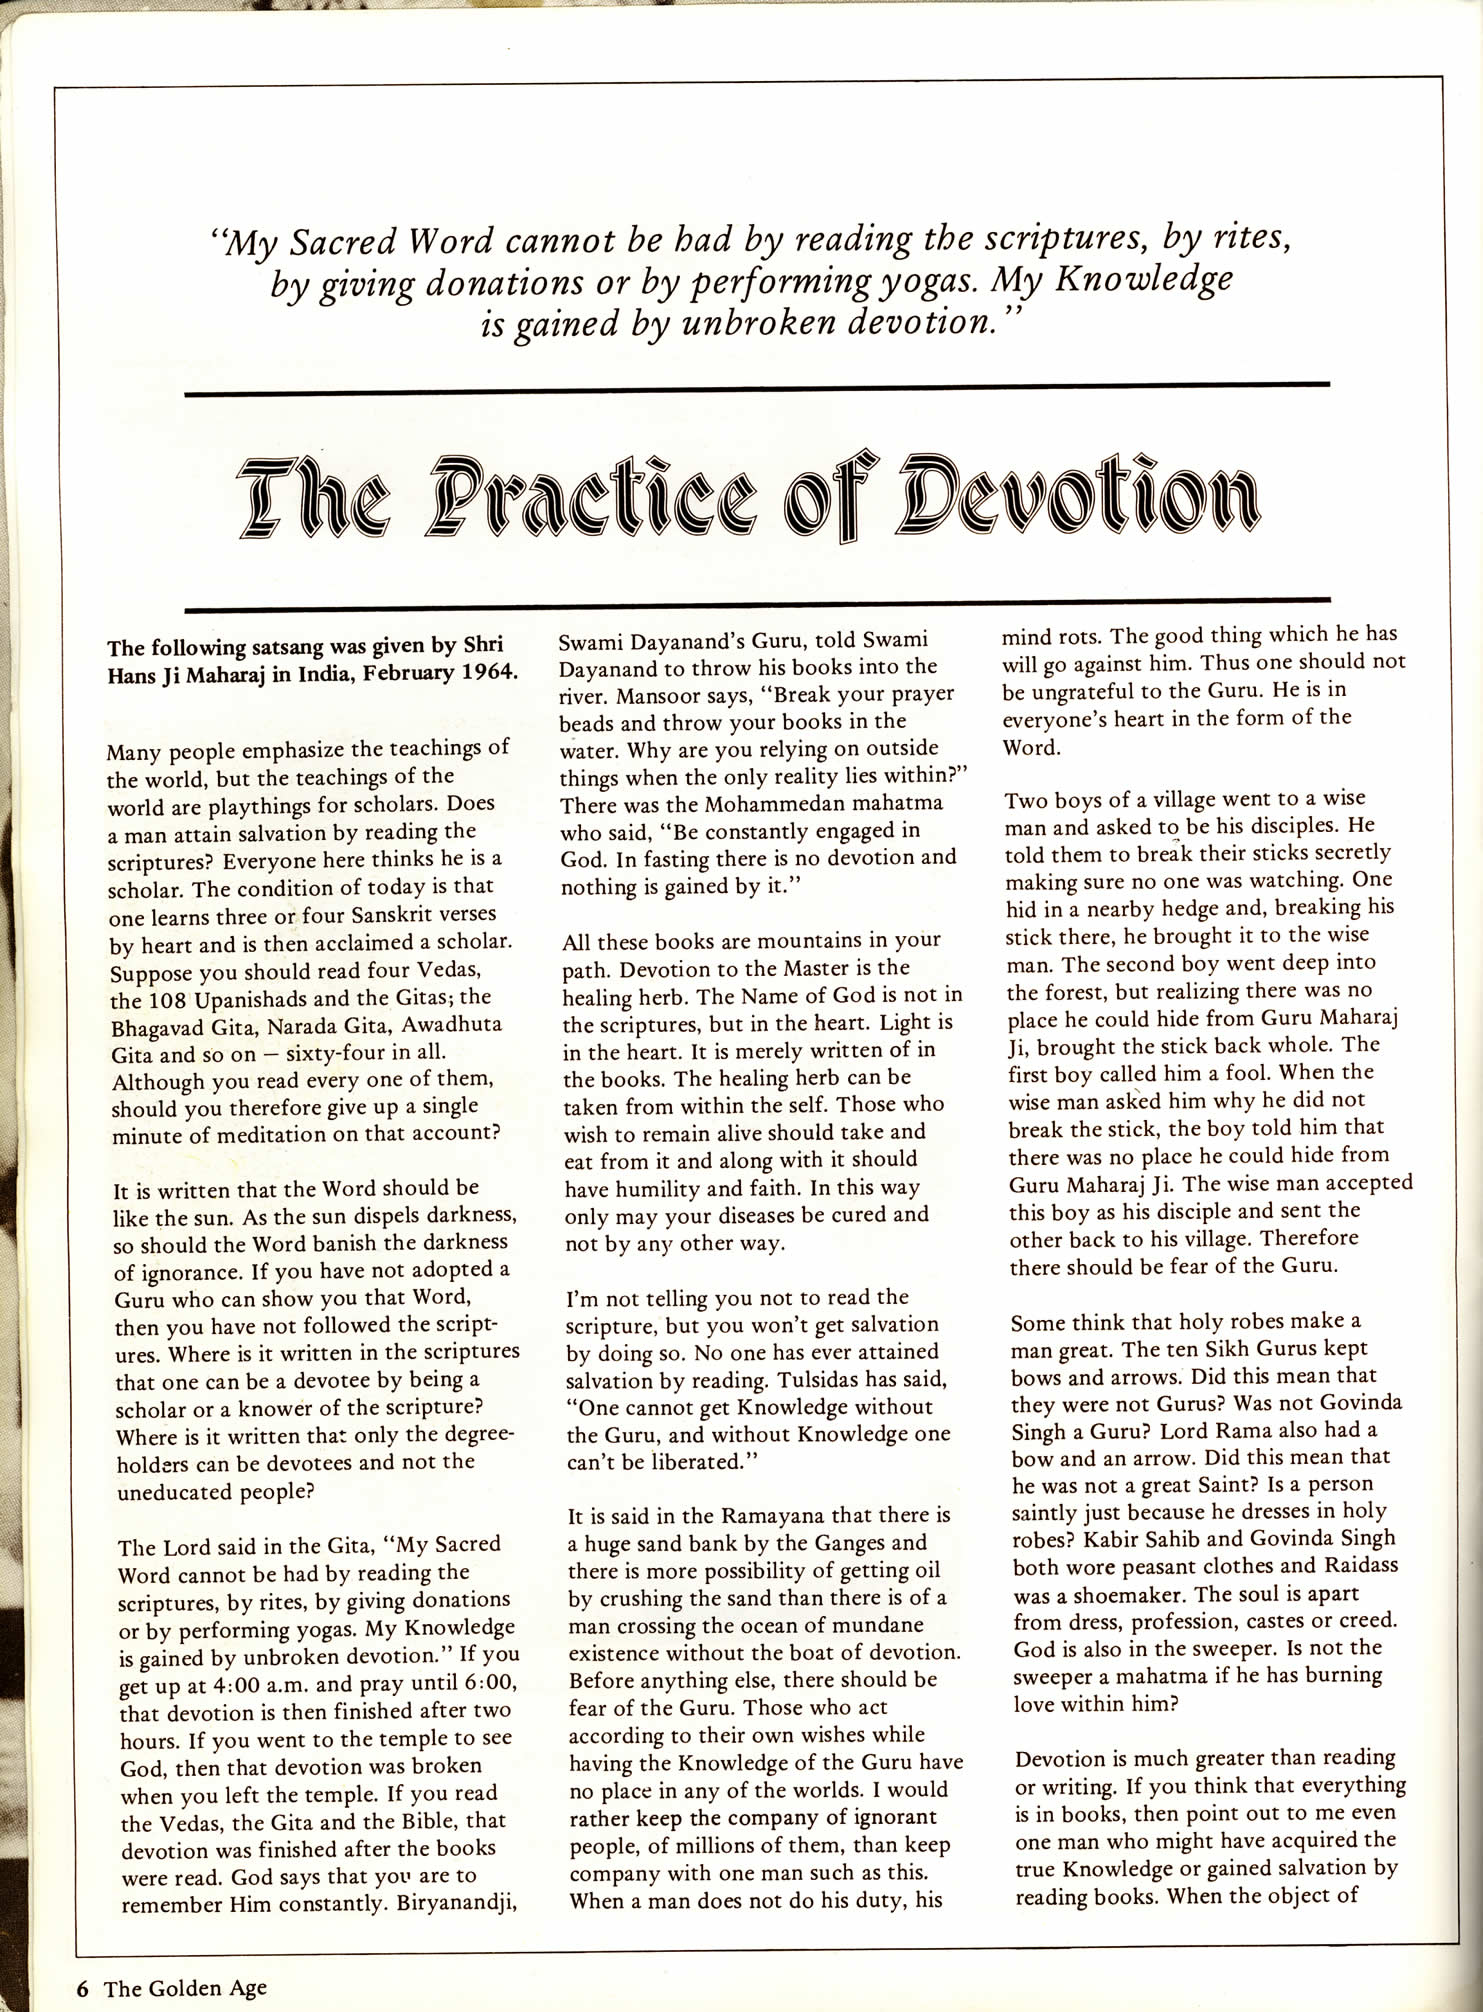 page06_shri_hans_the_practice_of_devotion.jpg 482.4K